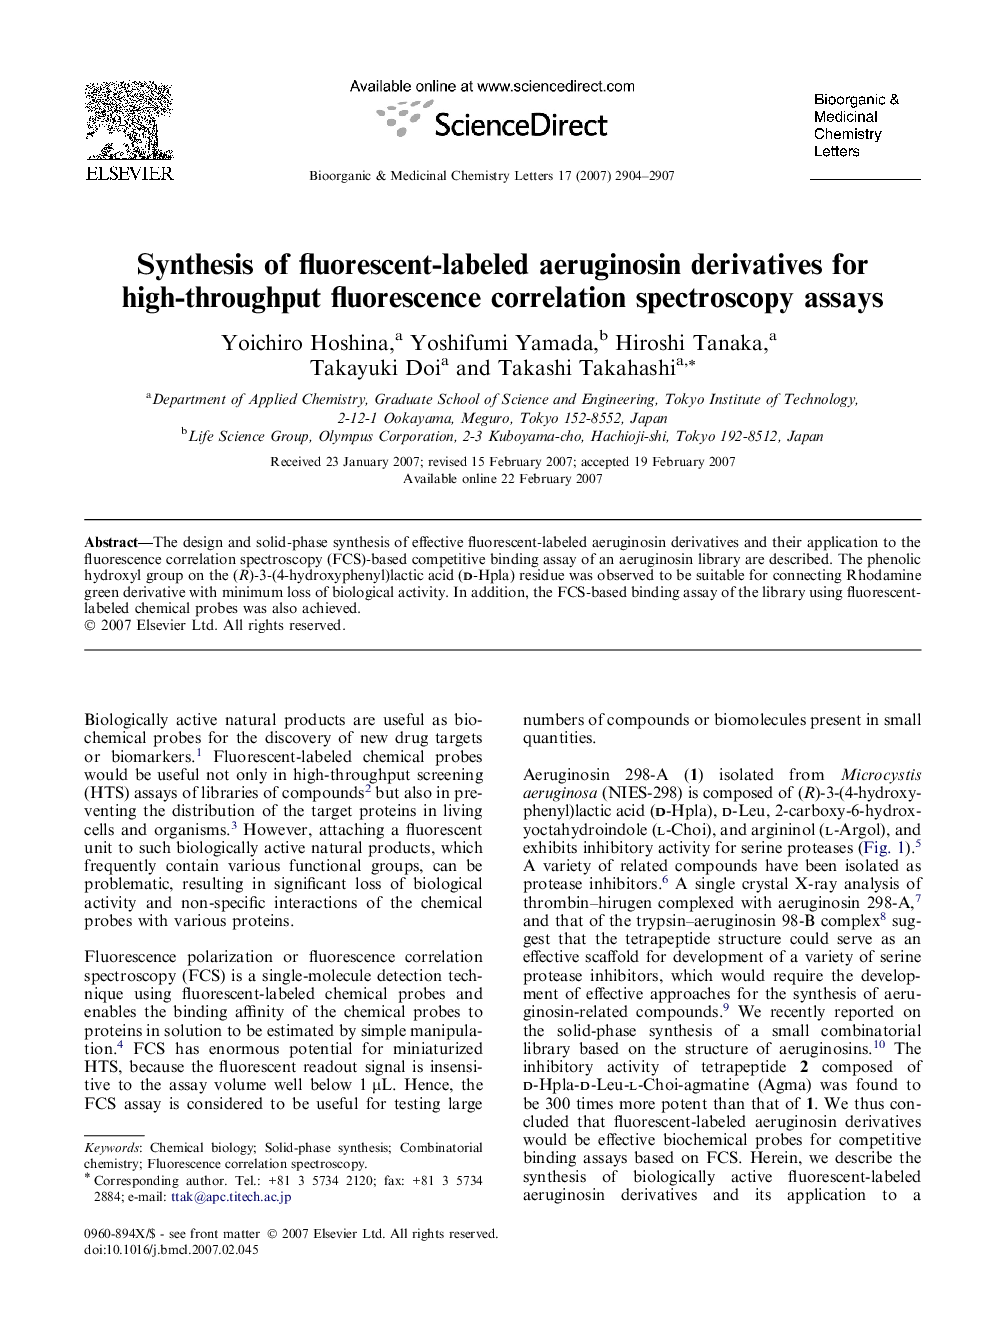 Synthesis of fluorescent-labeled aeruginosin derivatives for high-throughput fluorescence correlation spectroscopy assays